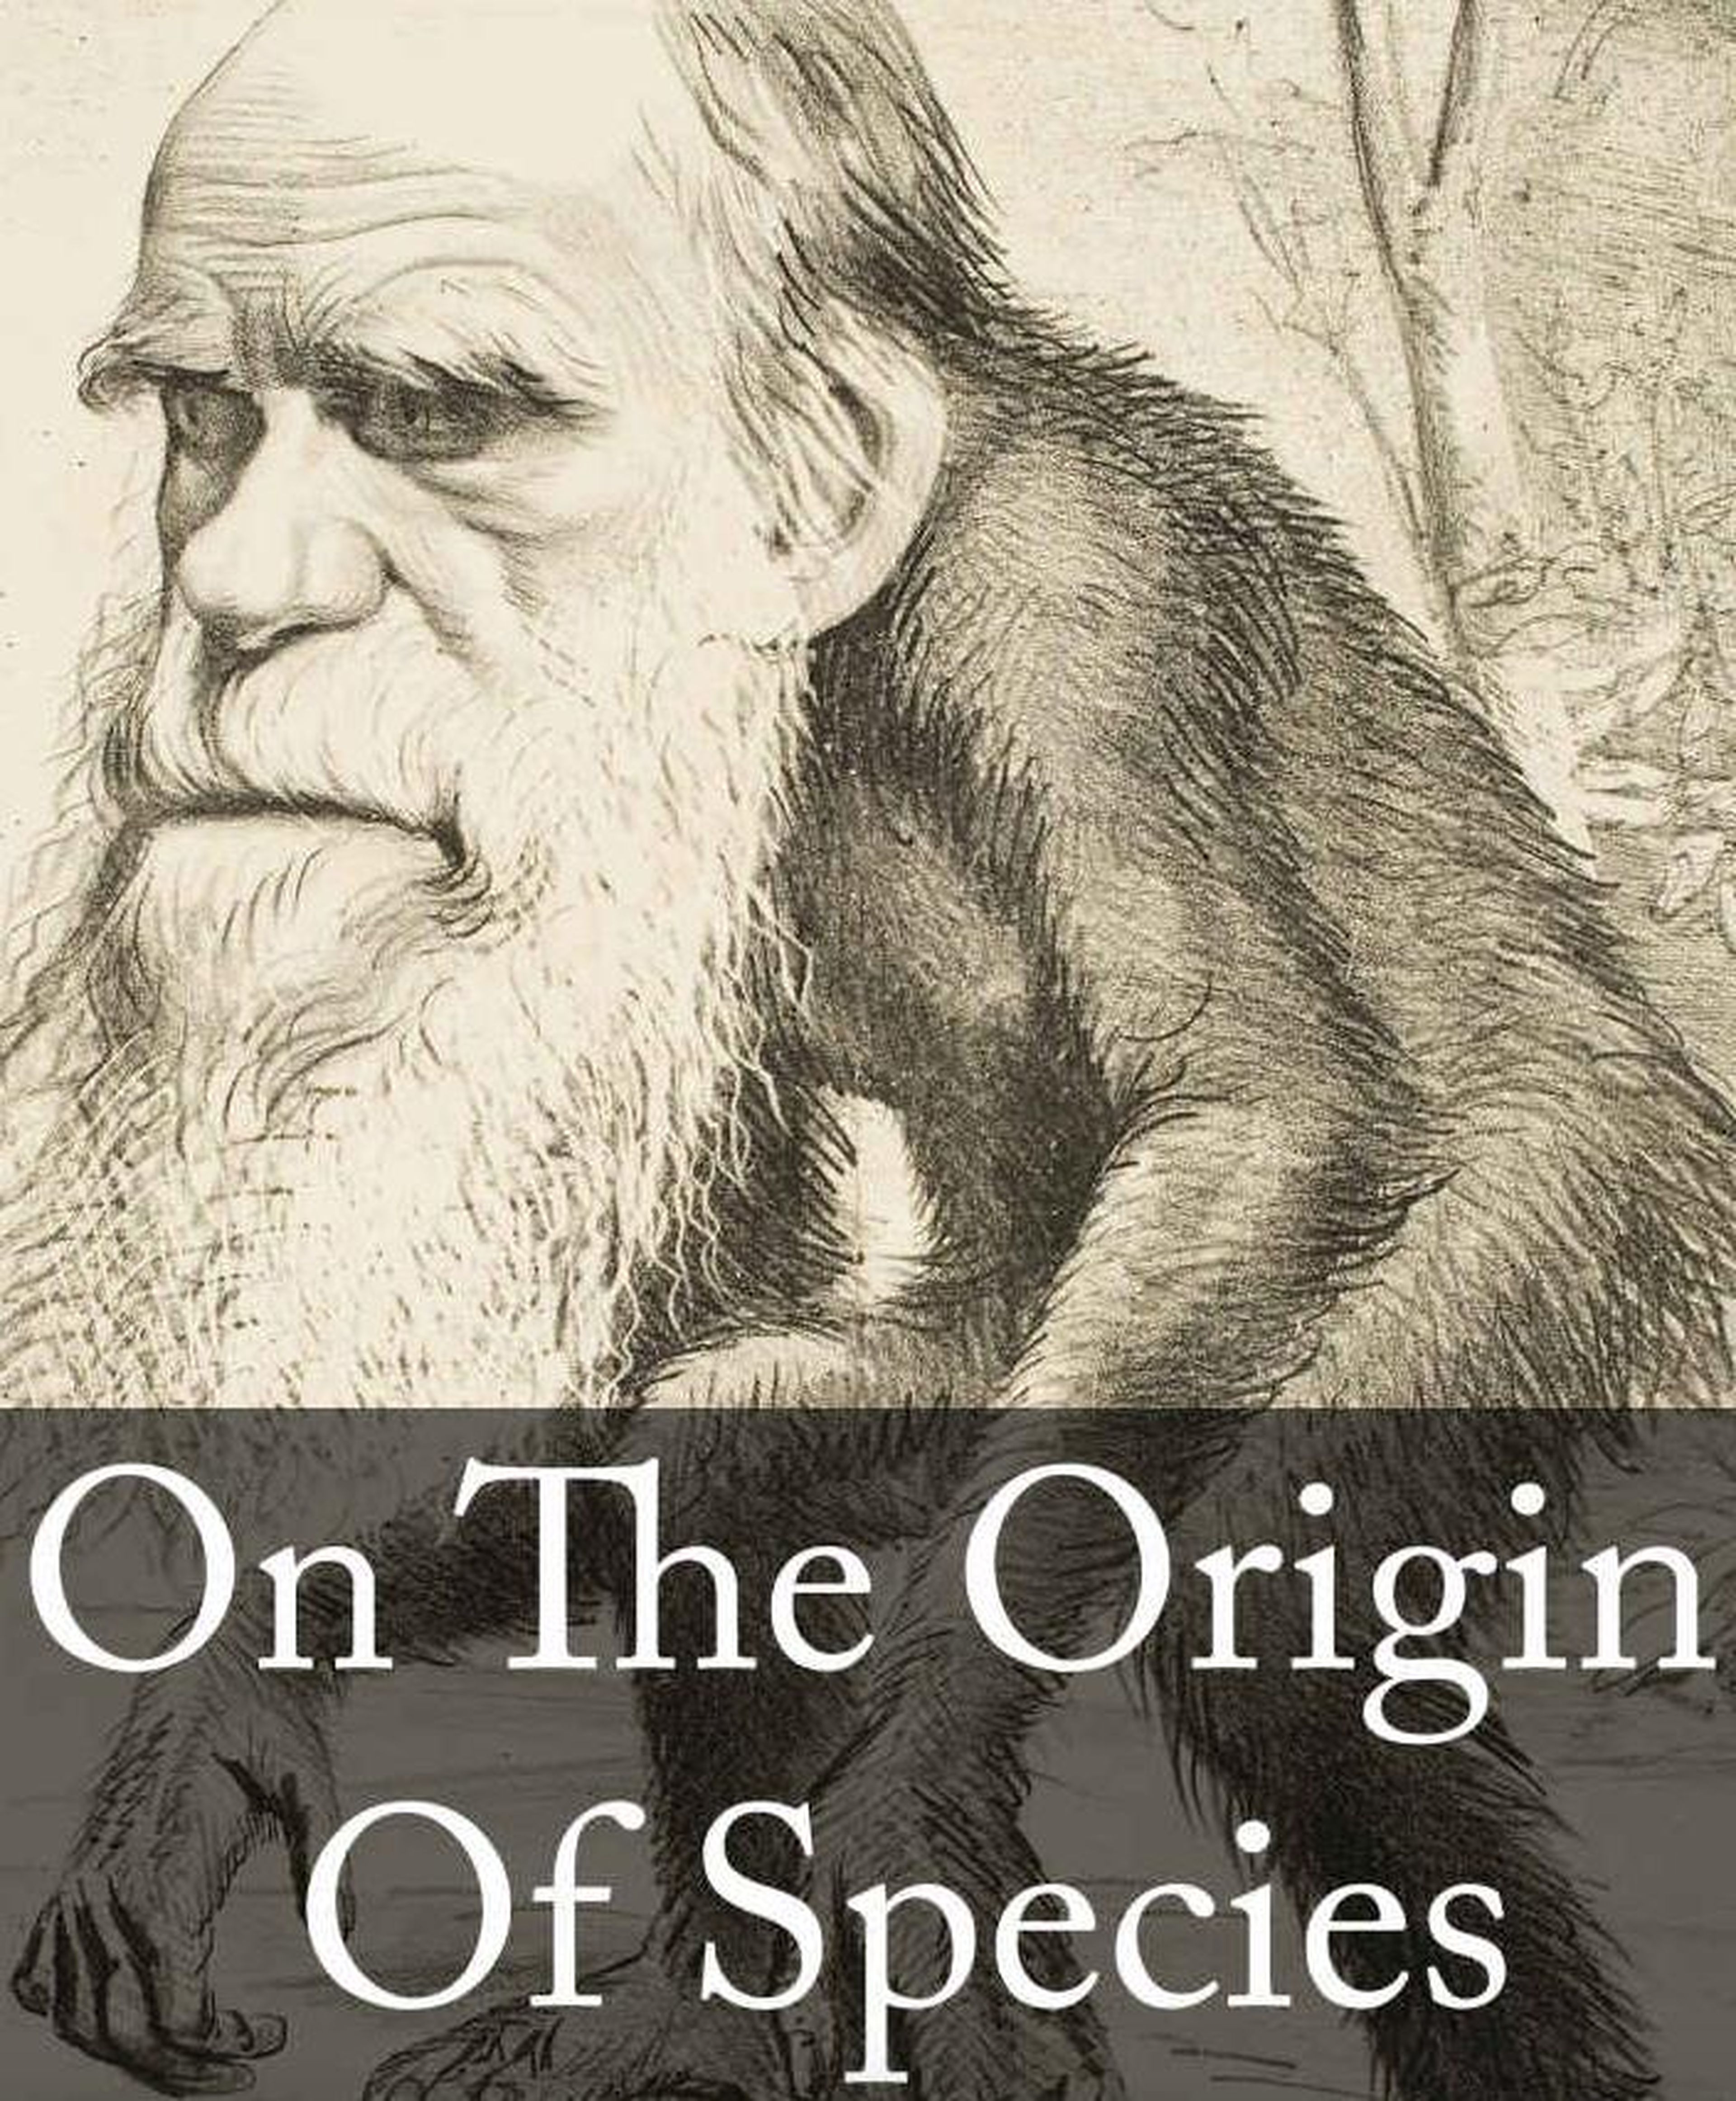 Neil deGrasse Tyson: "On the Origin of Species" by Charles Darwin